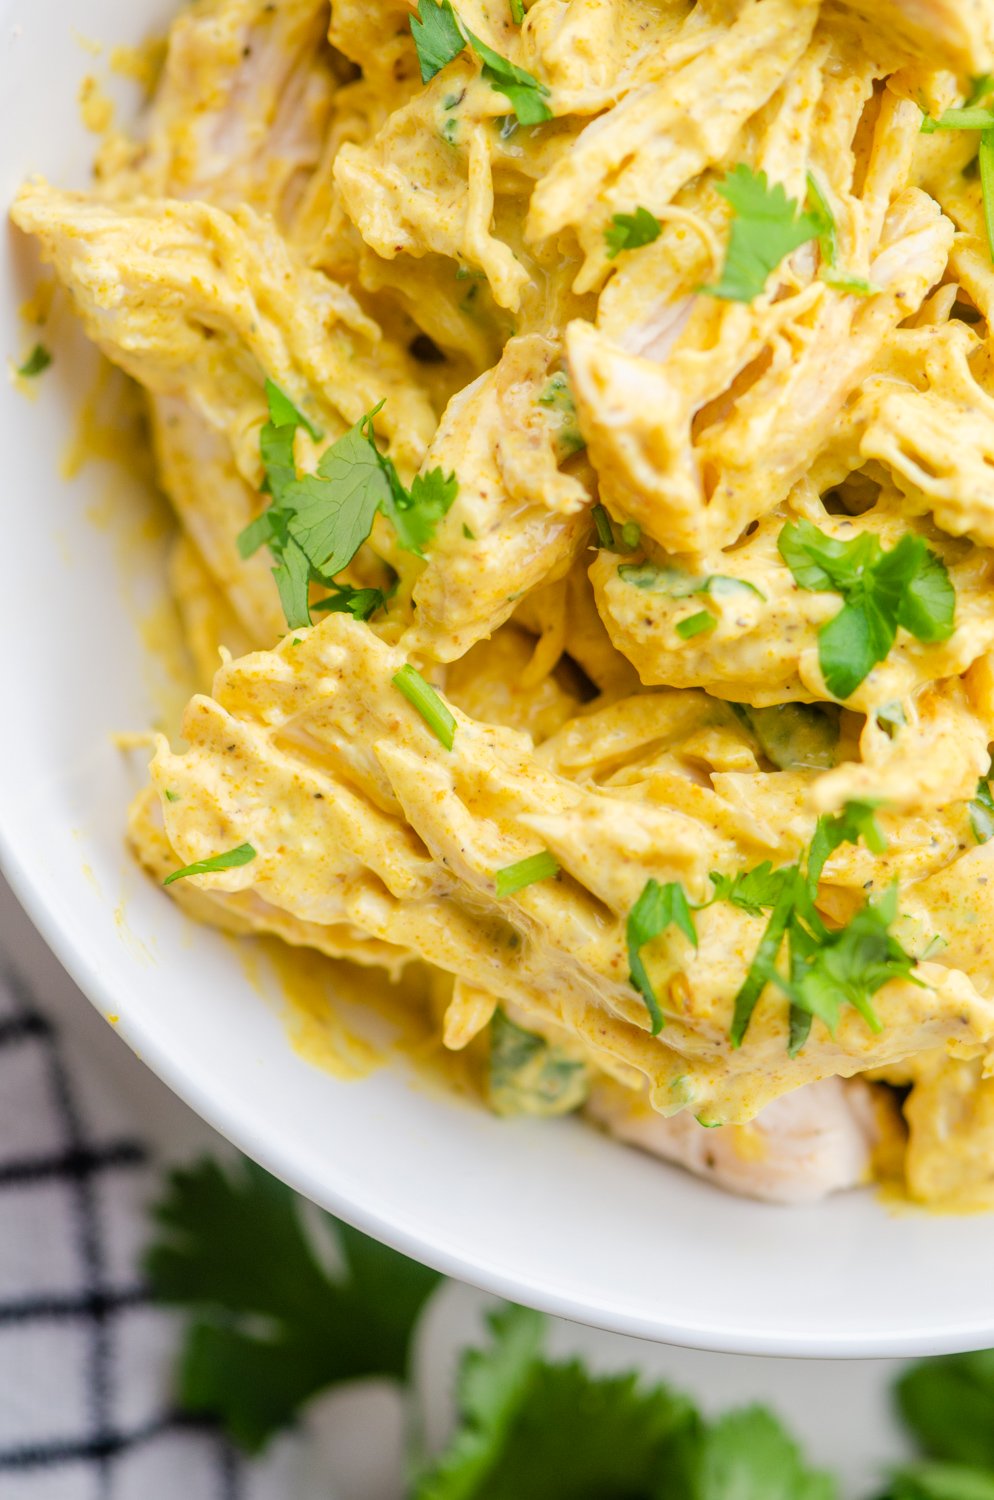 Curry Chicken Salad Recipe